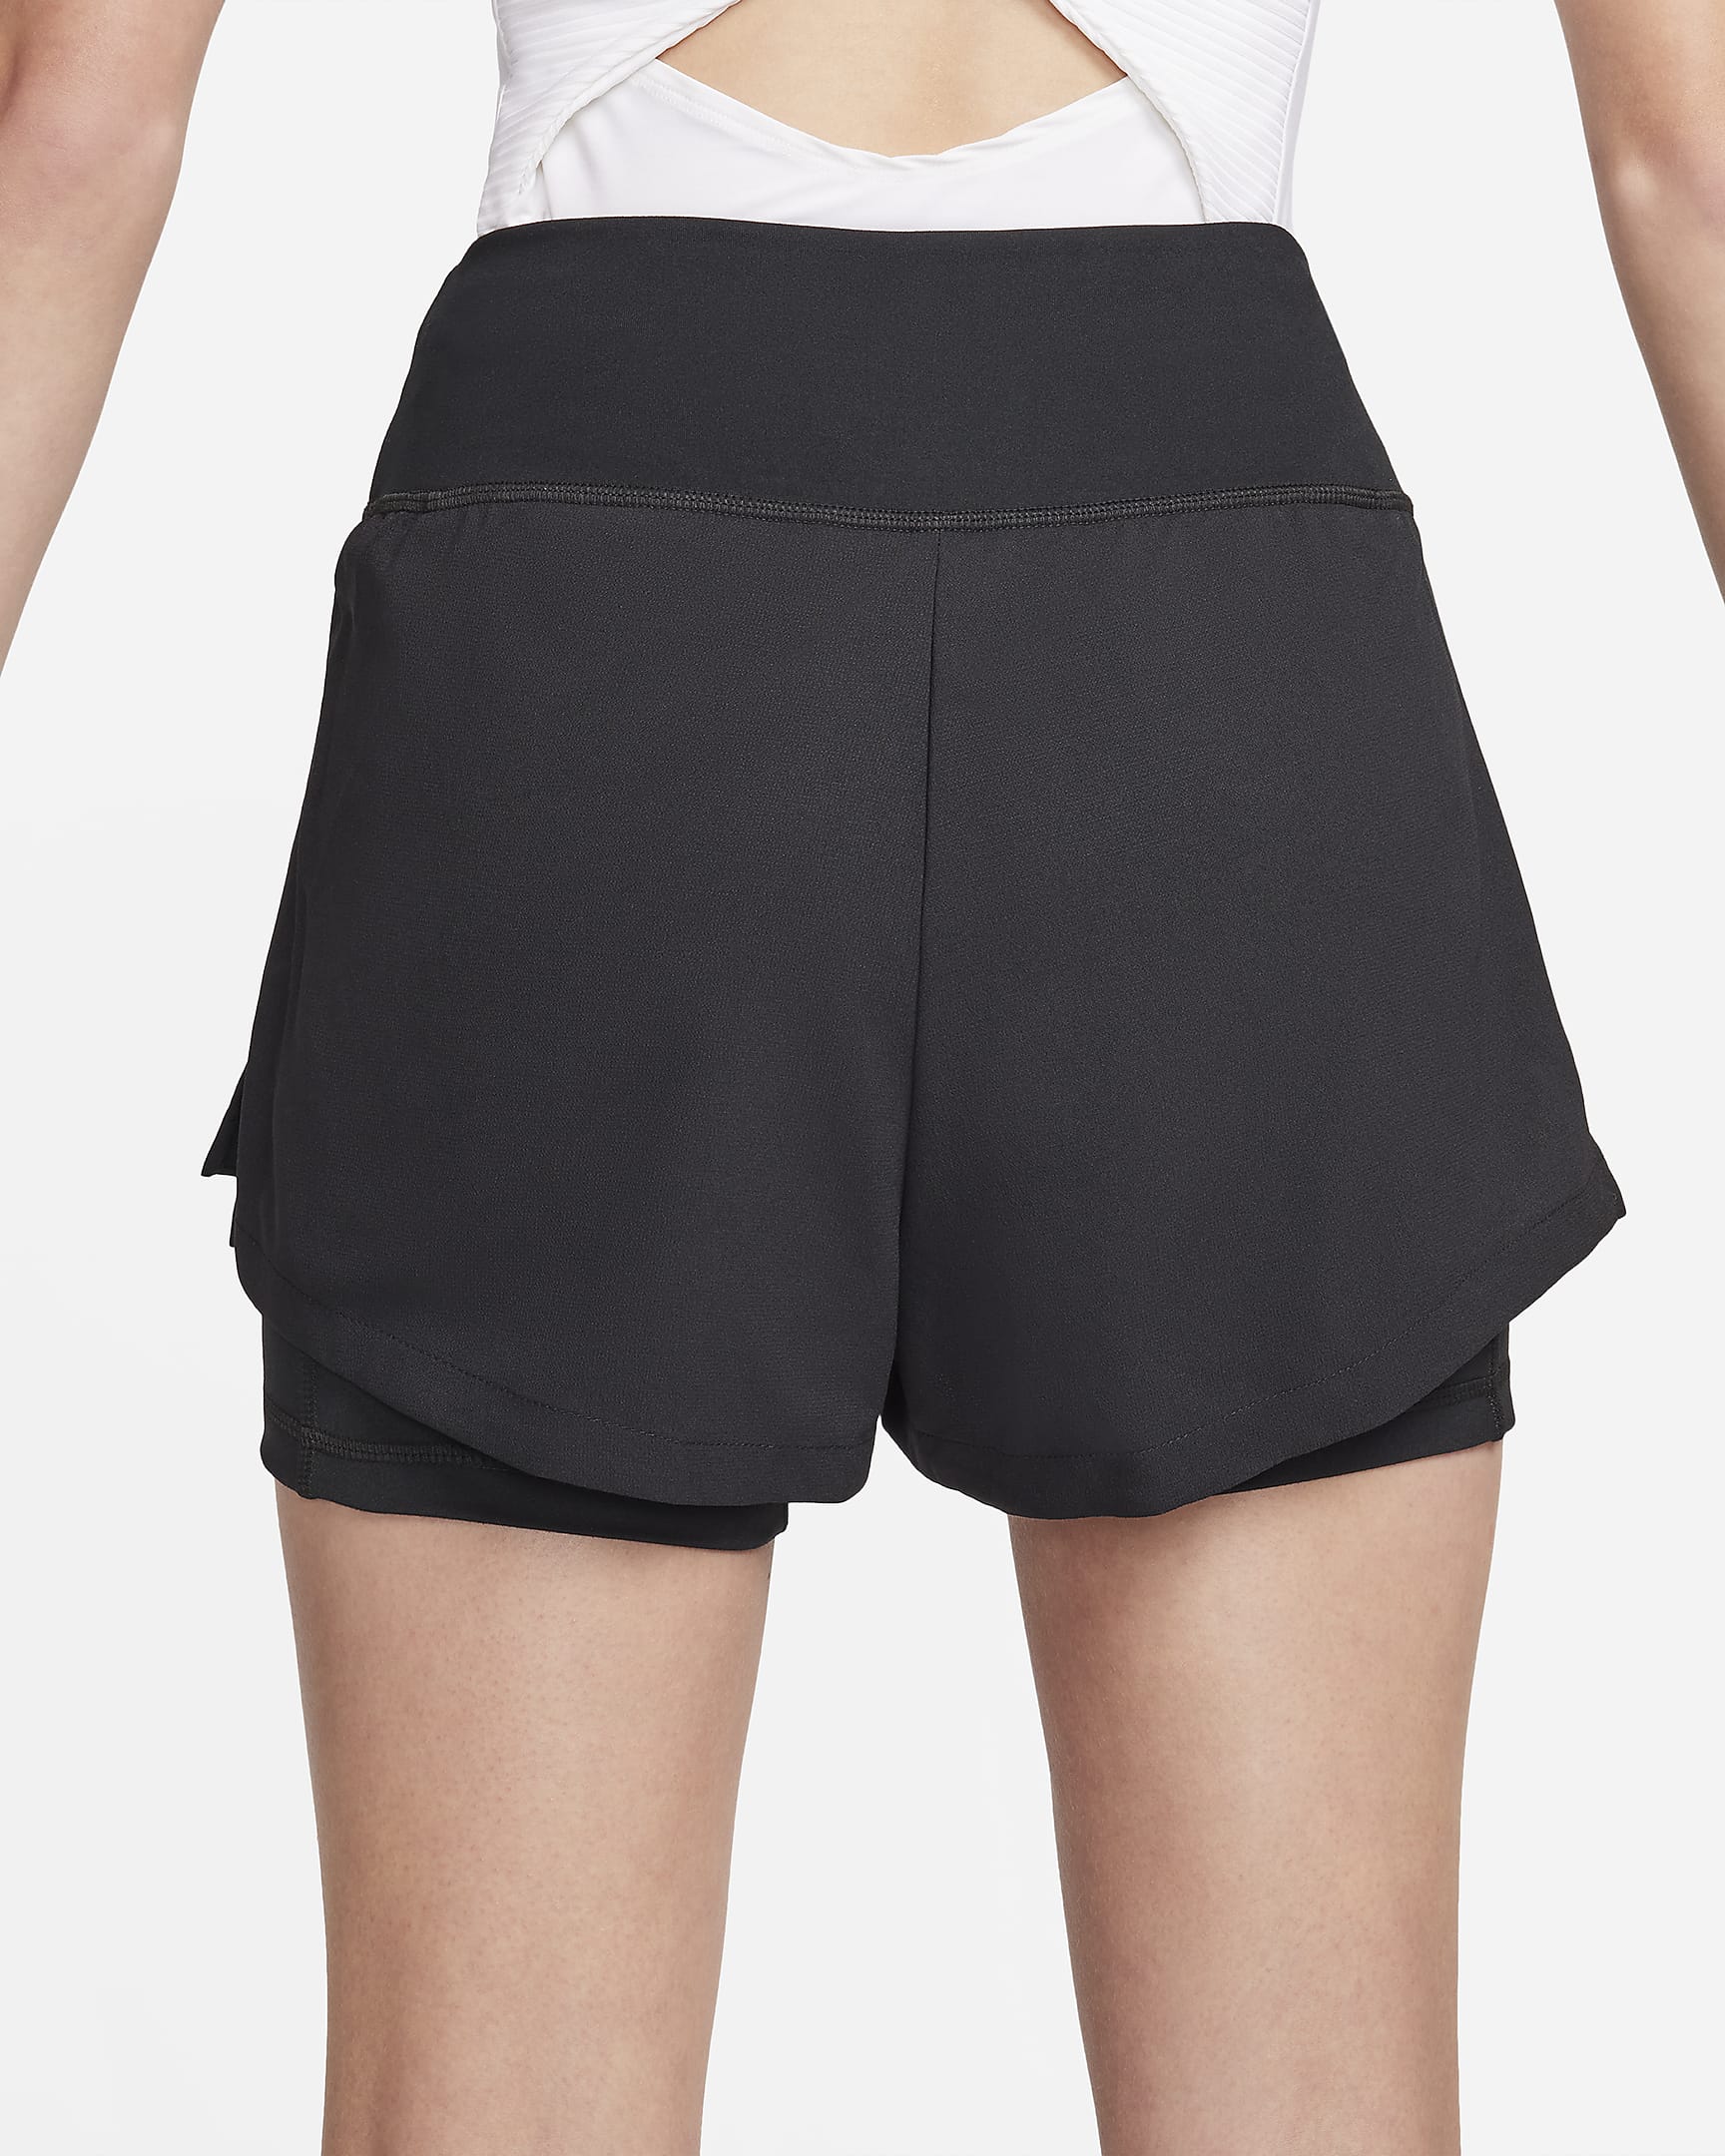 nikecourt advantage womens dri fit tennis shorts back size from Nike